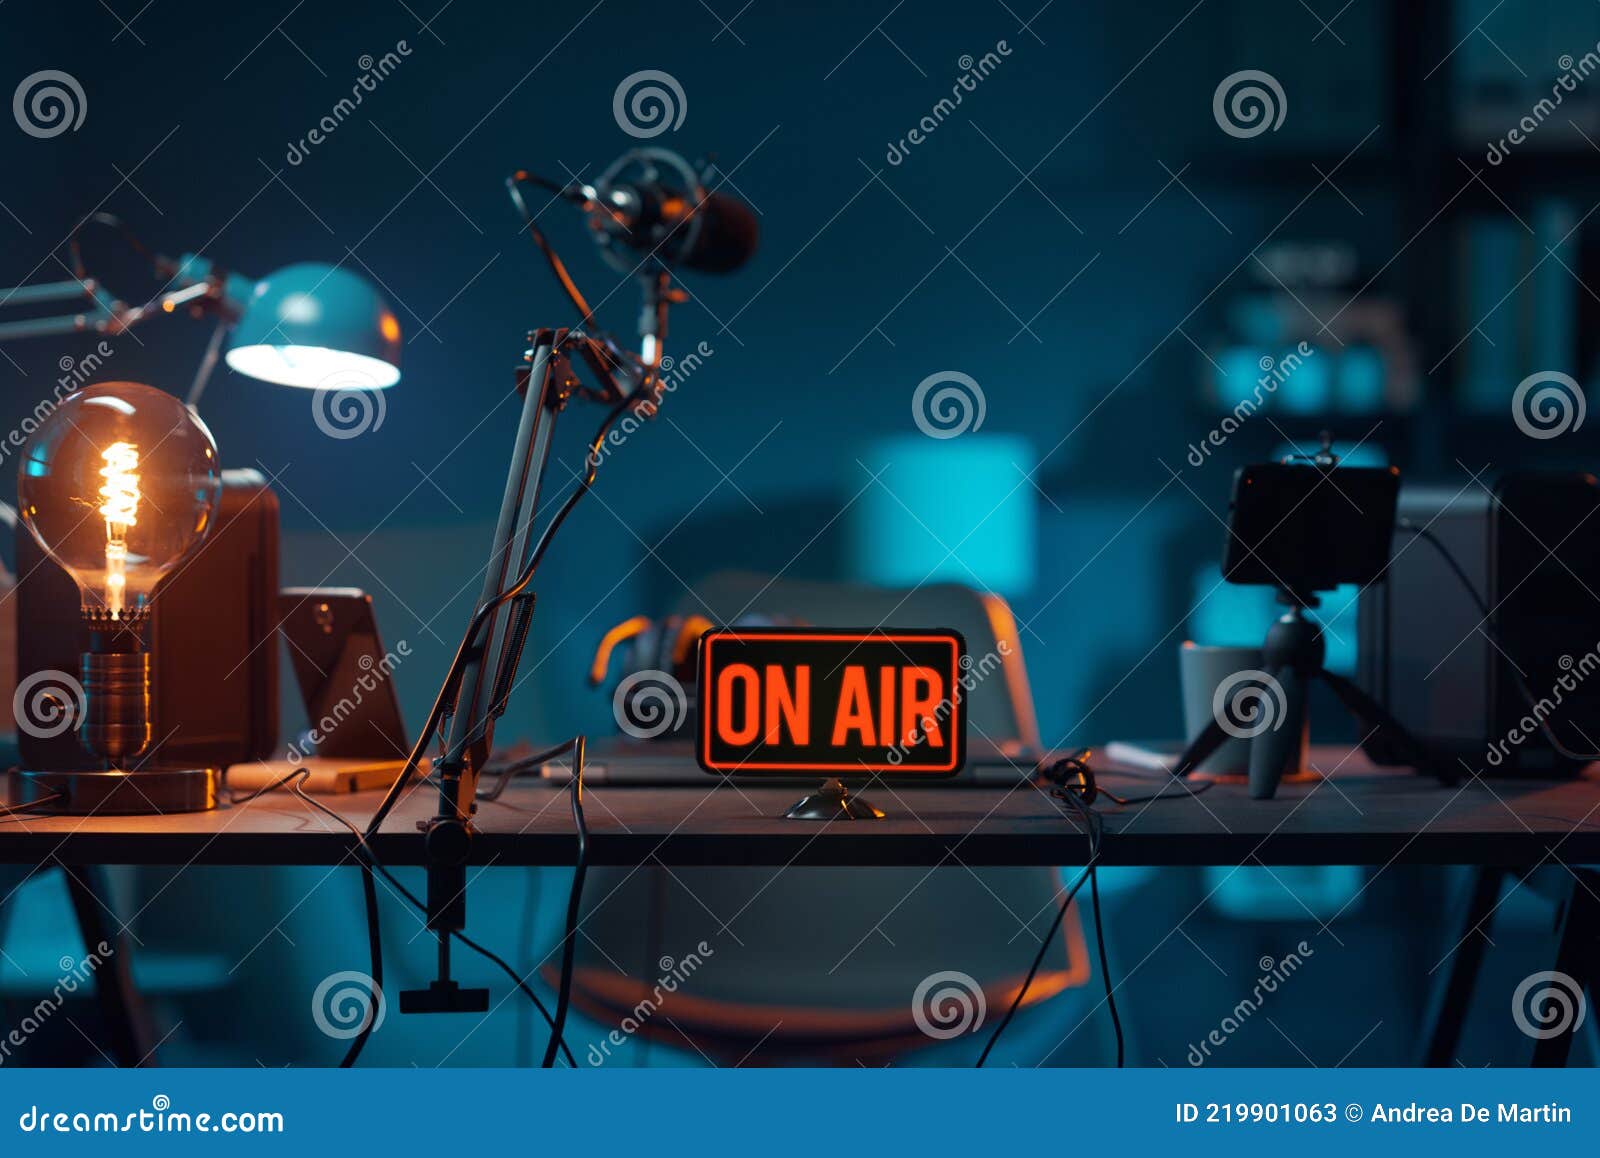 https://thumbs.dreamstime.com/z/live-online-radio-studio-air-sign-live-online-radio-studio-desk-air-sign-entertainment-communication-concept-219901063.jpg